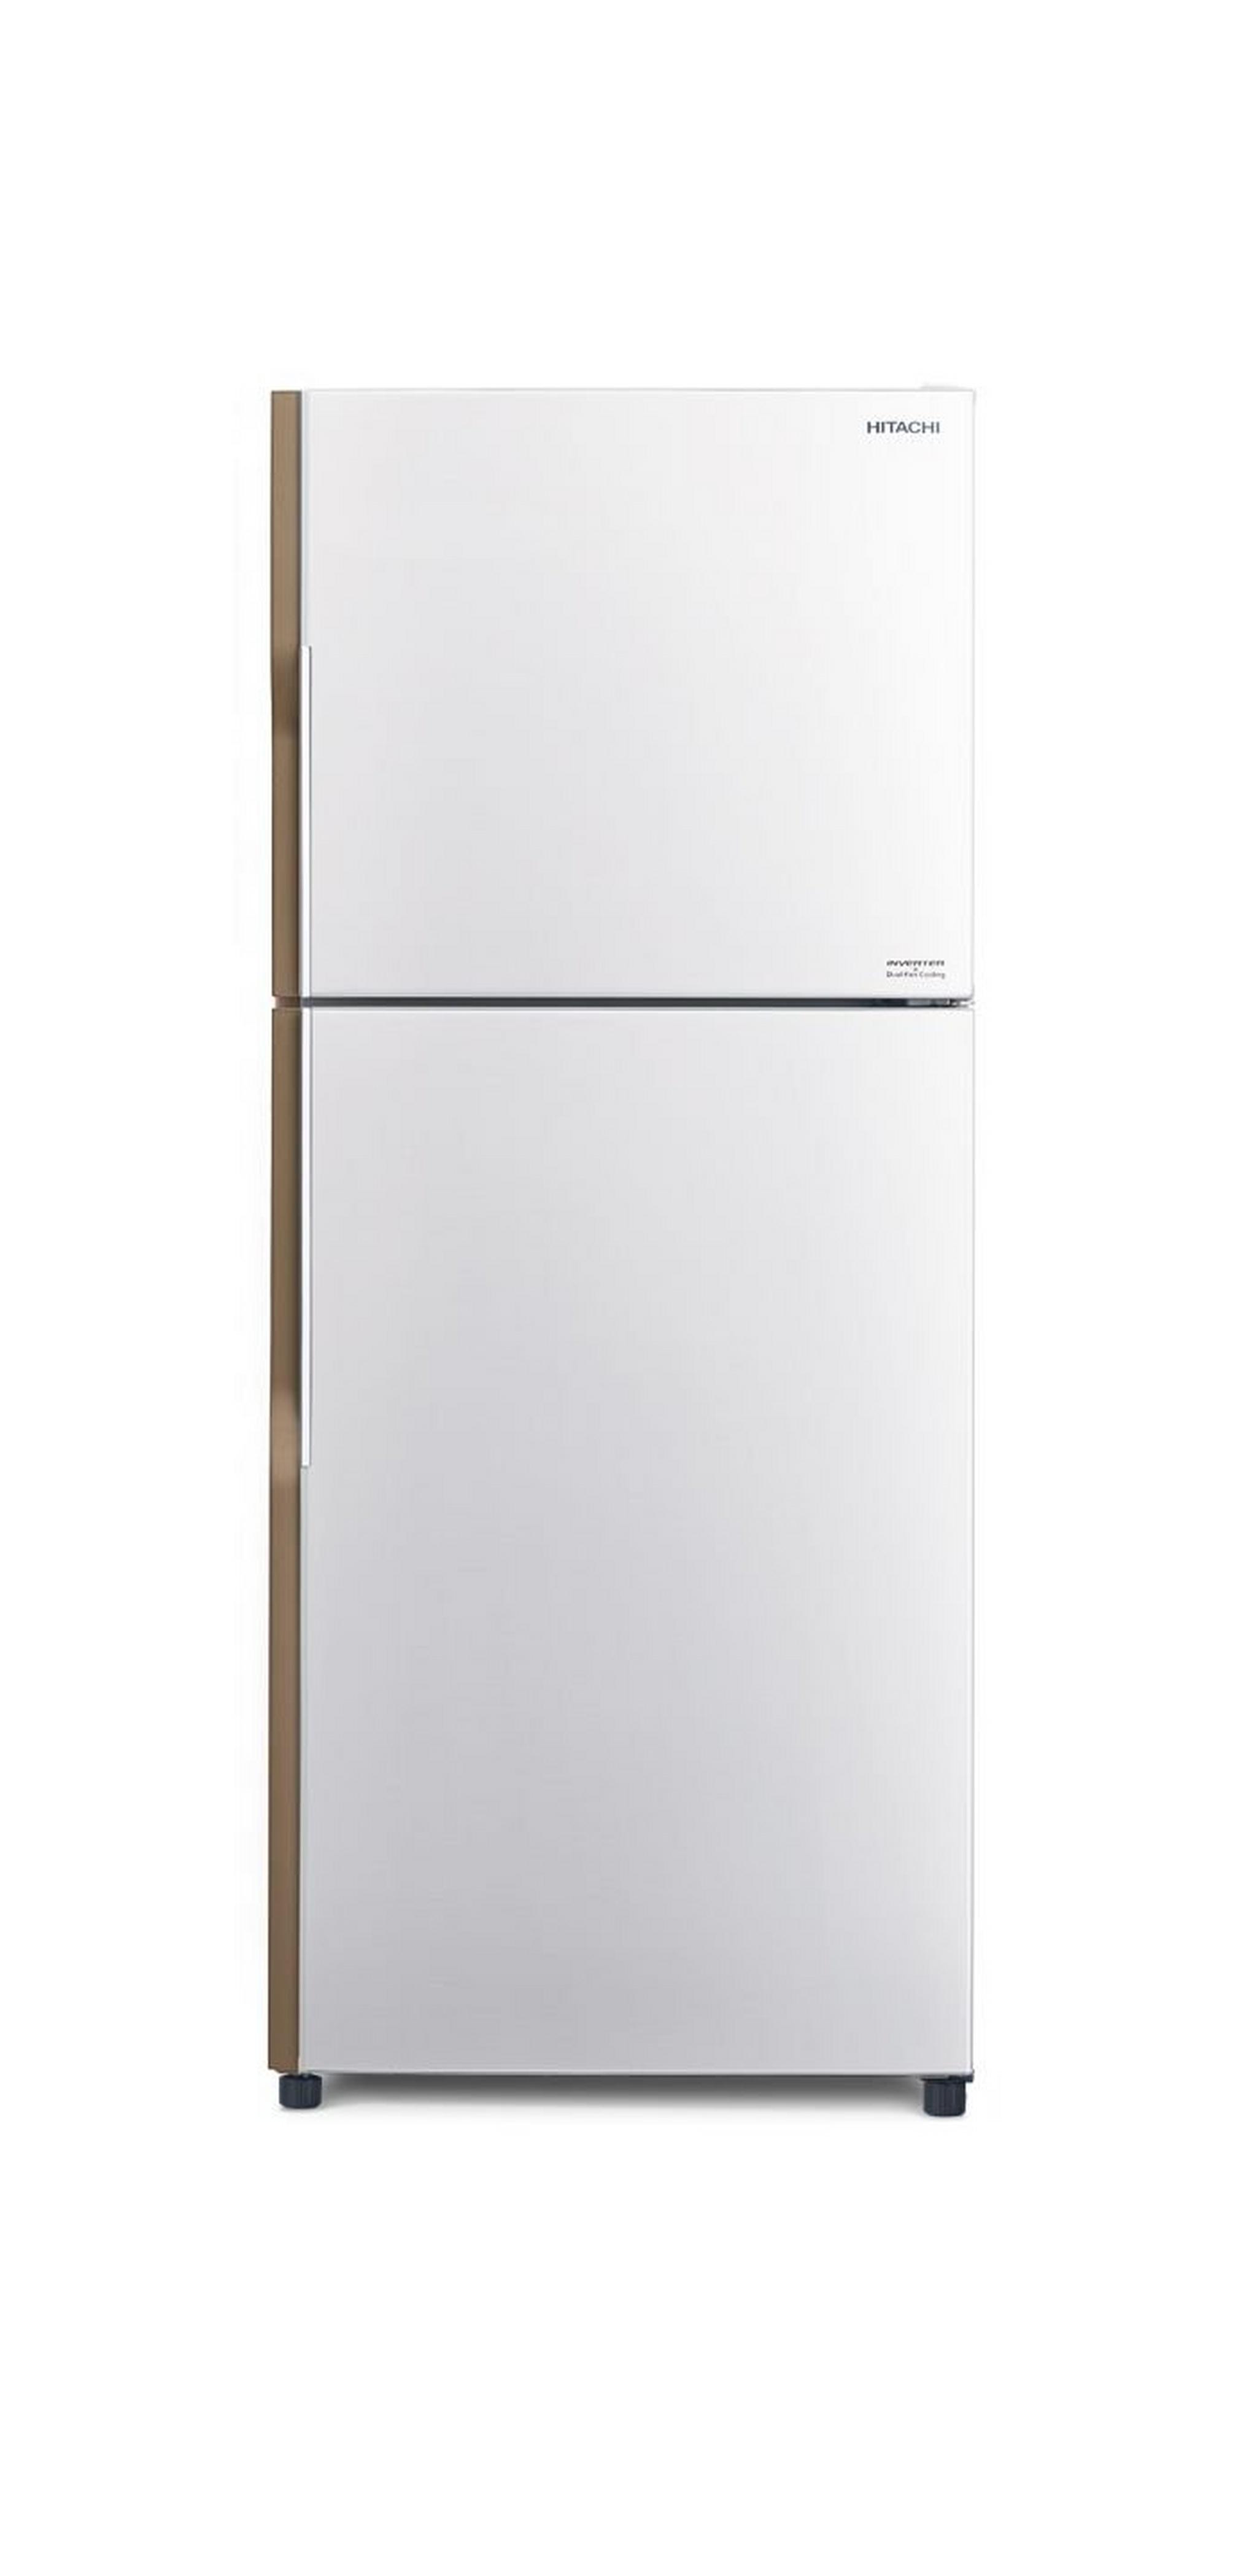 Hitachi 11.84 CFT Top Mount Refrigerator (R-V400PS8K) - White